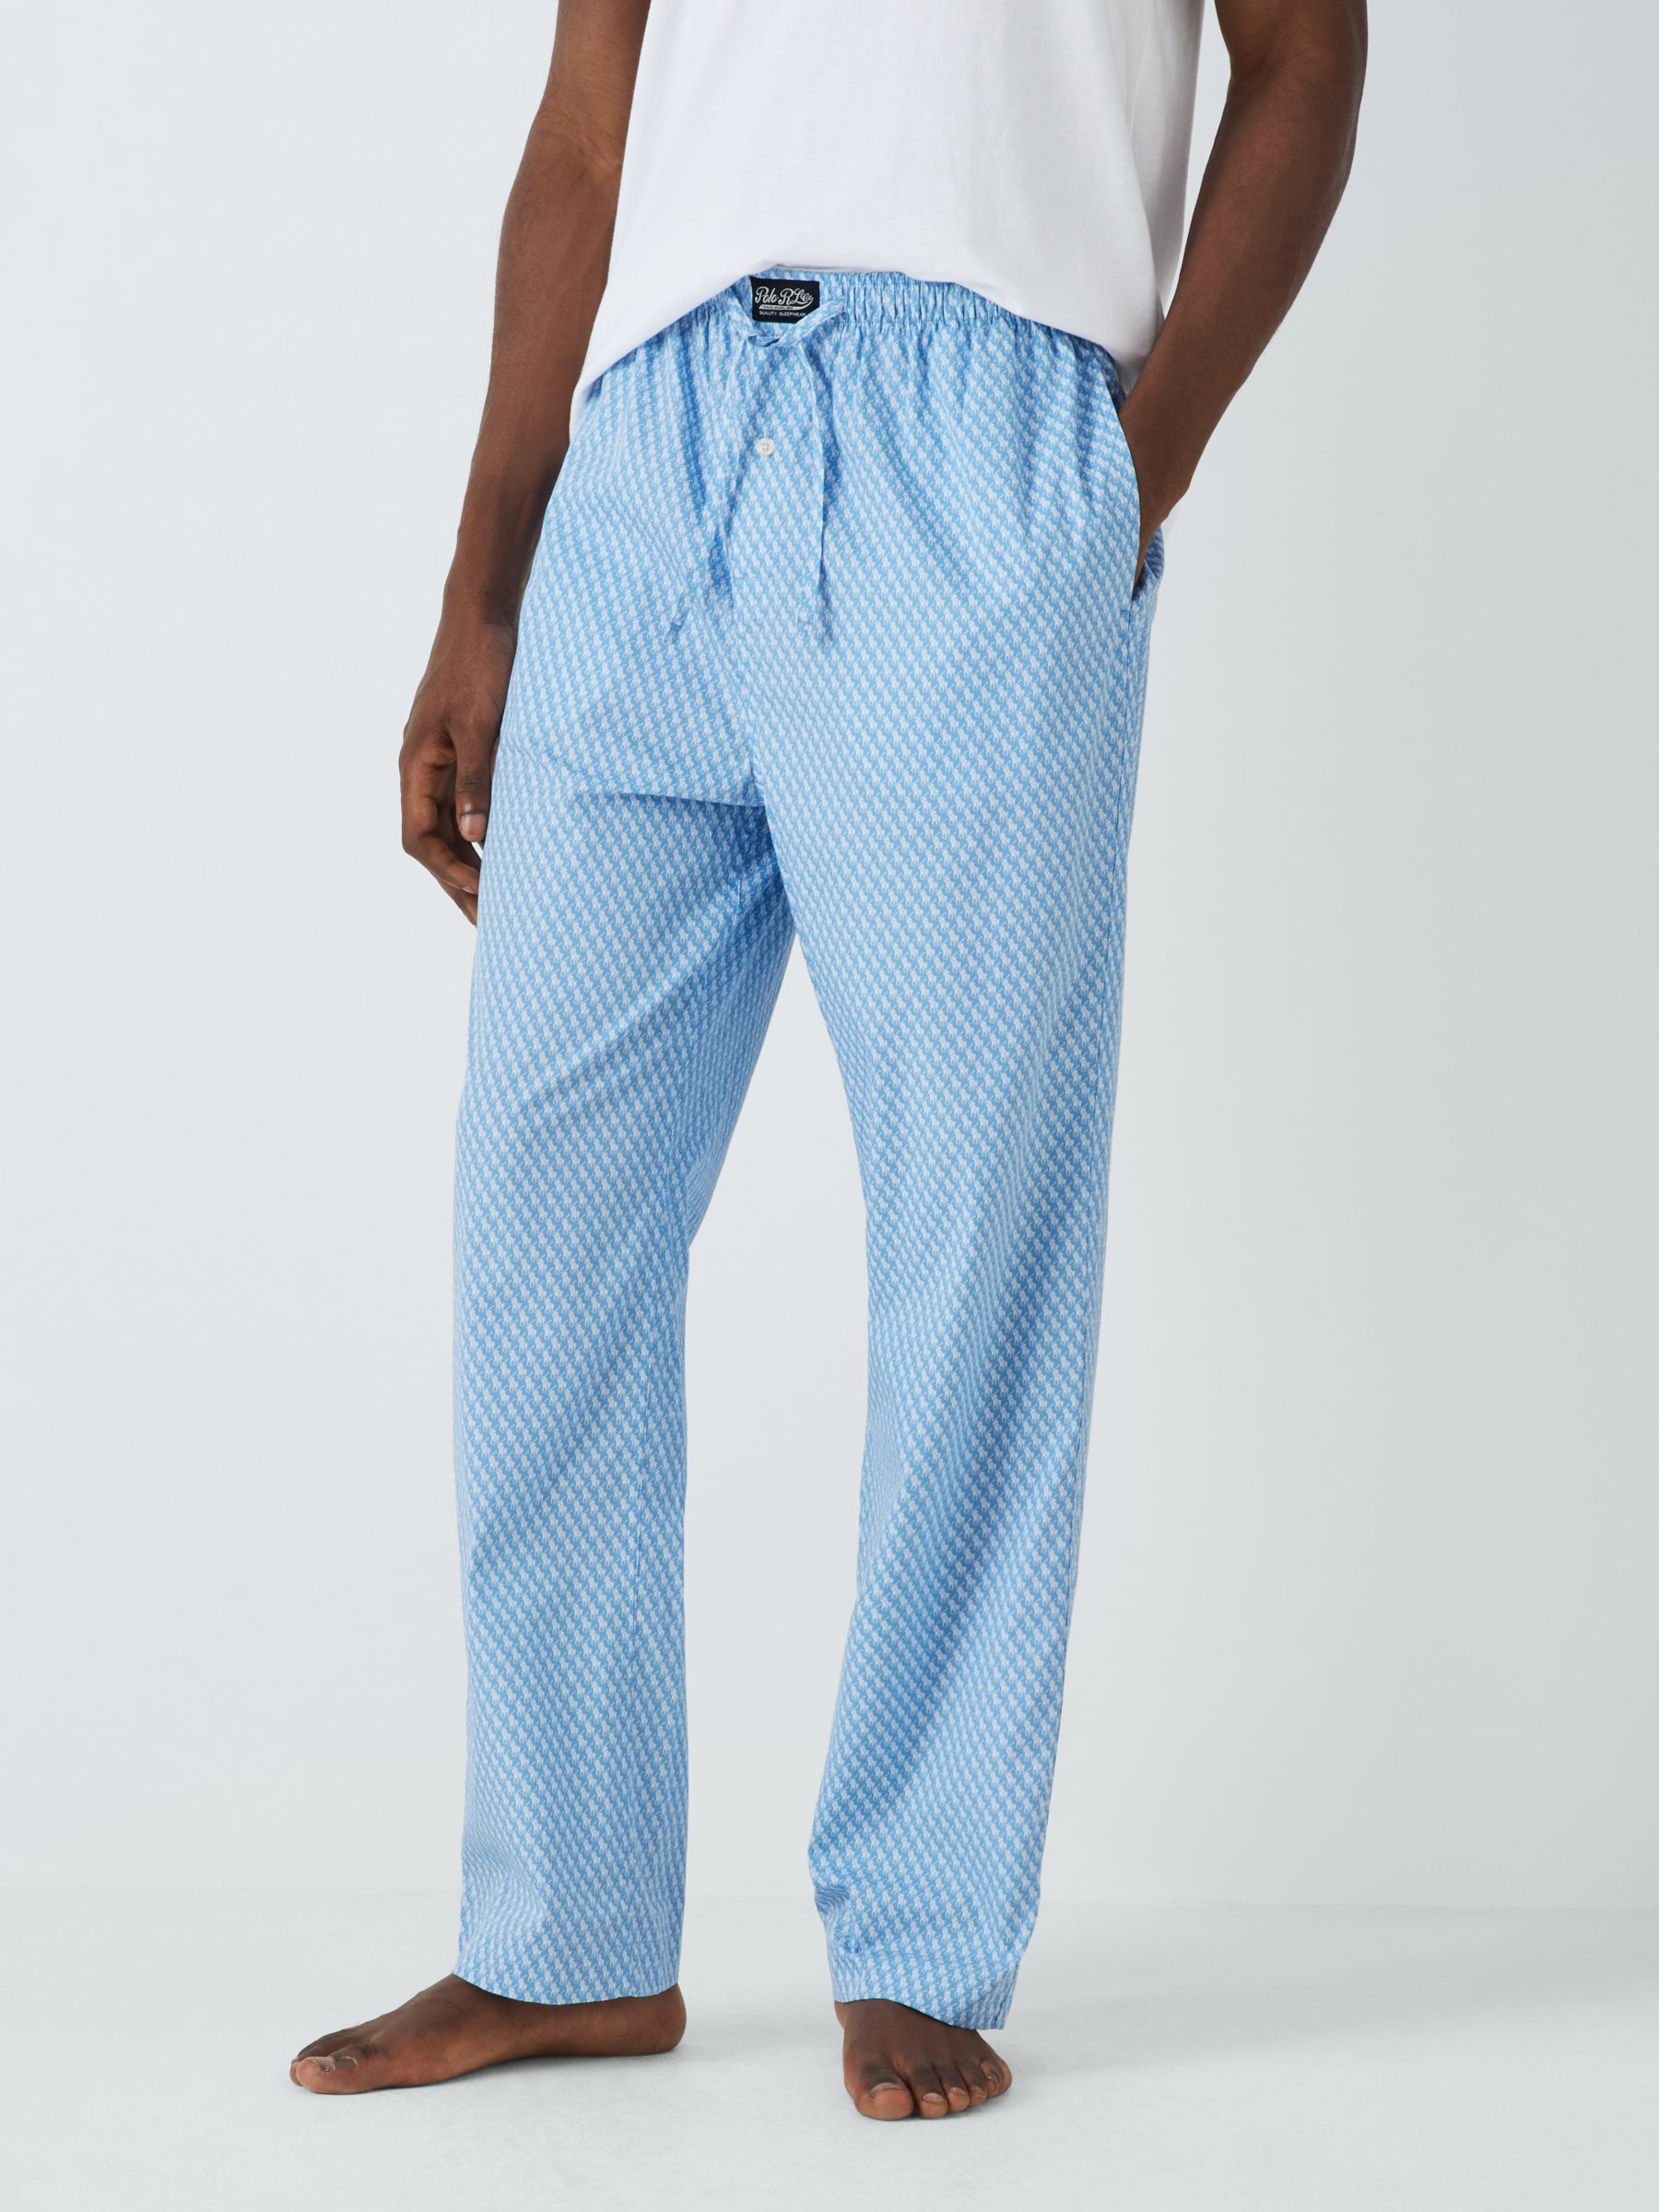 Polo Ralph Lauren Cotton Pyjama Bottoms, Sky Blue/White